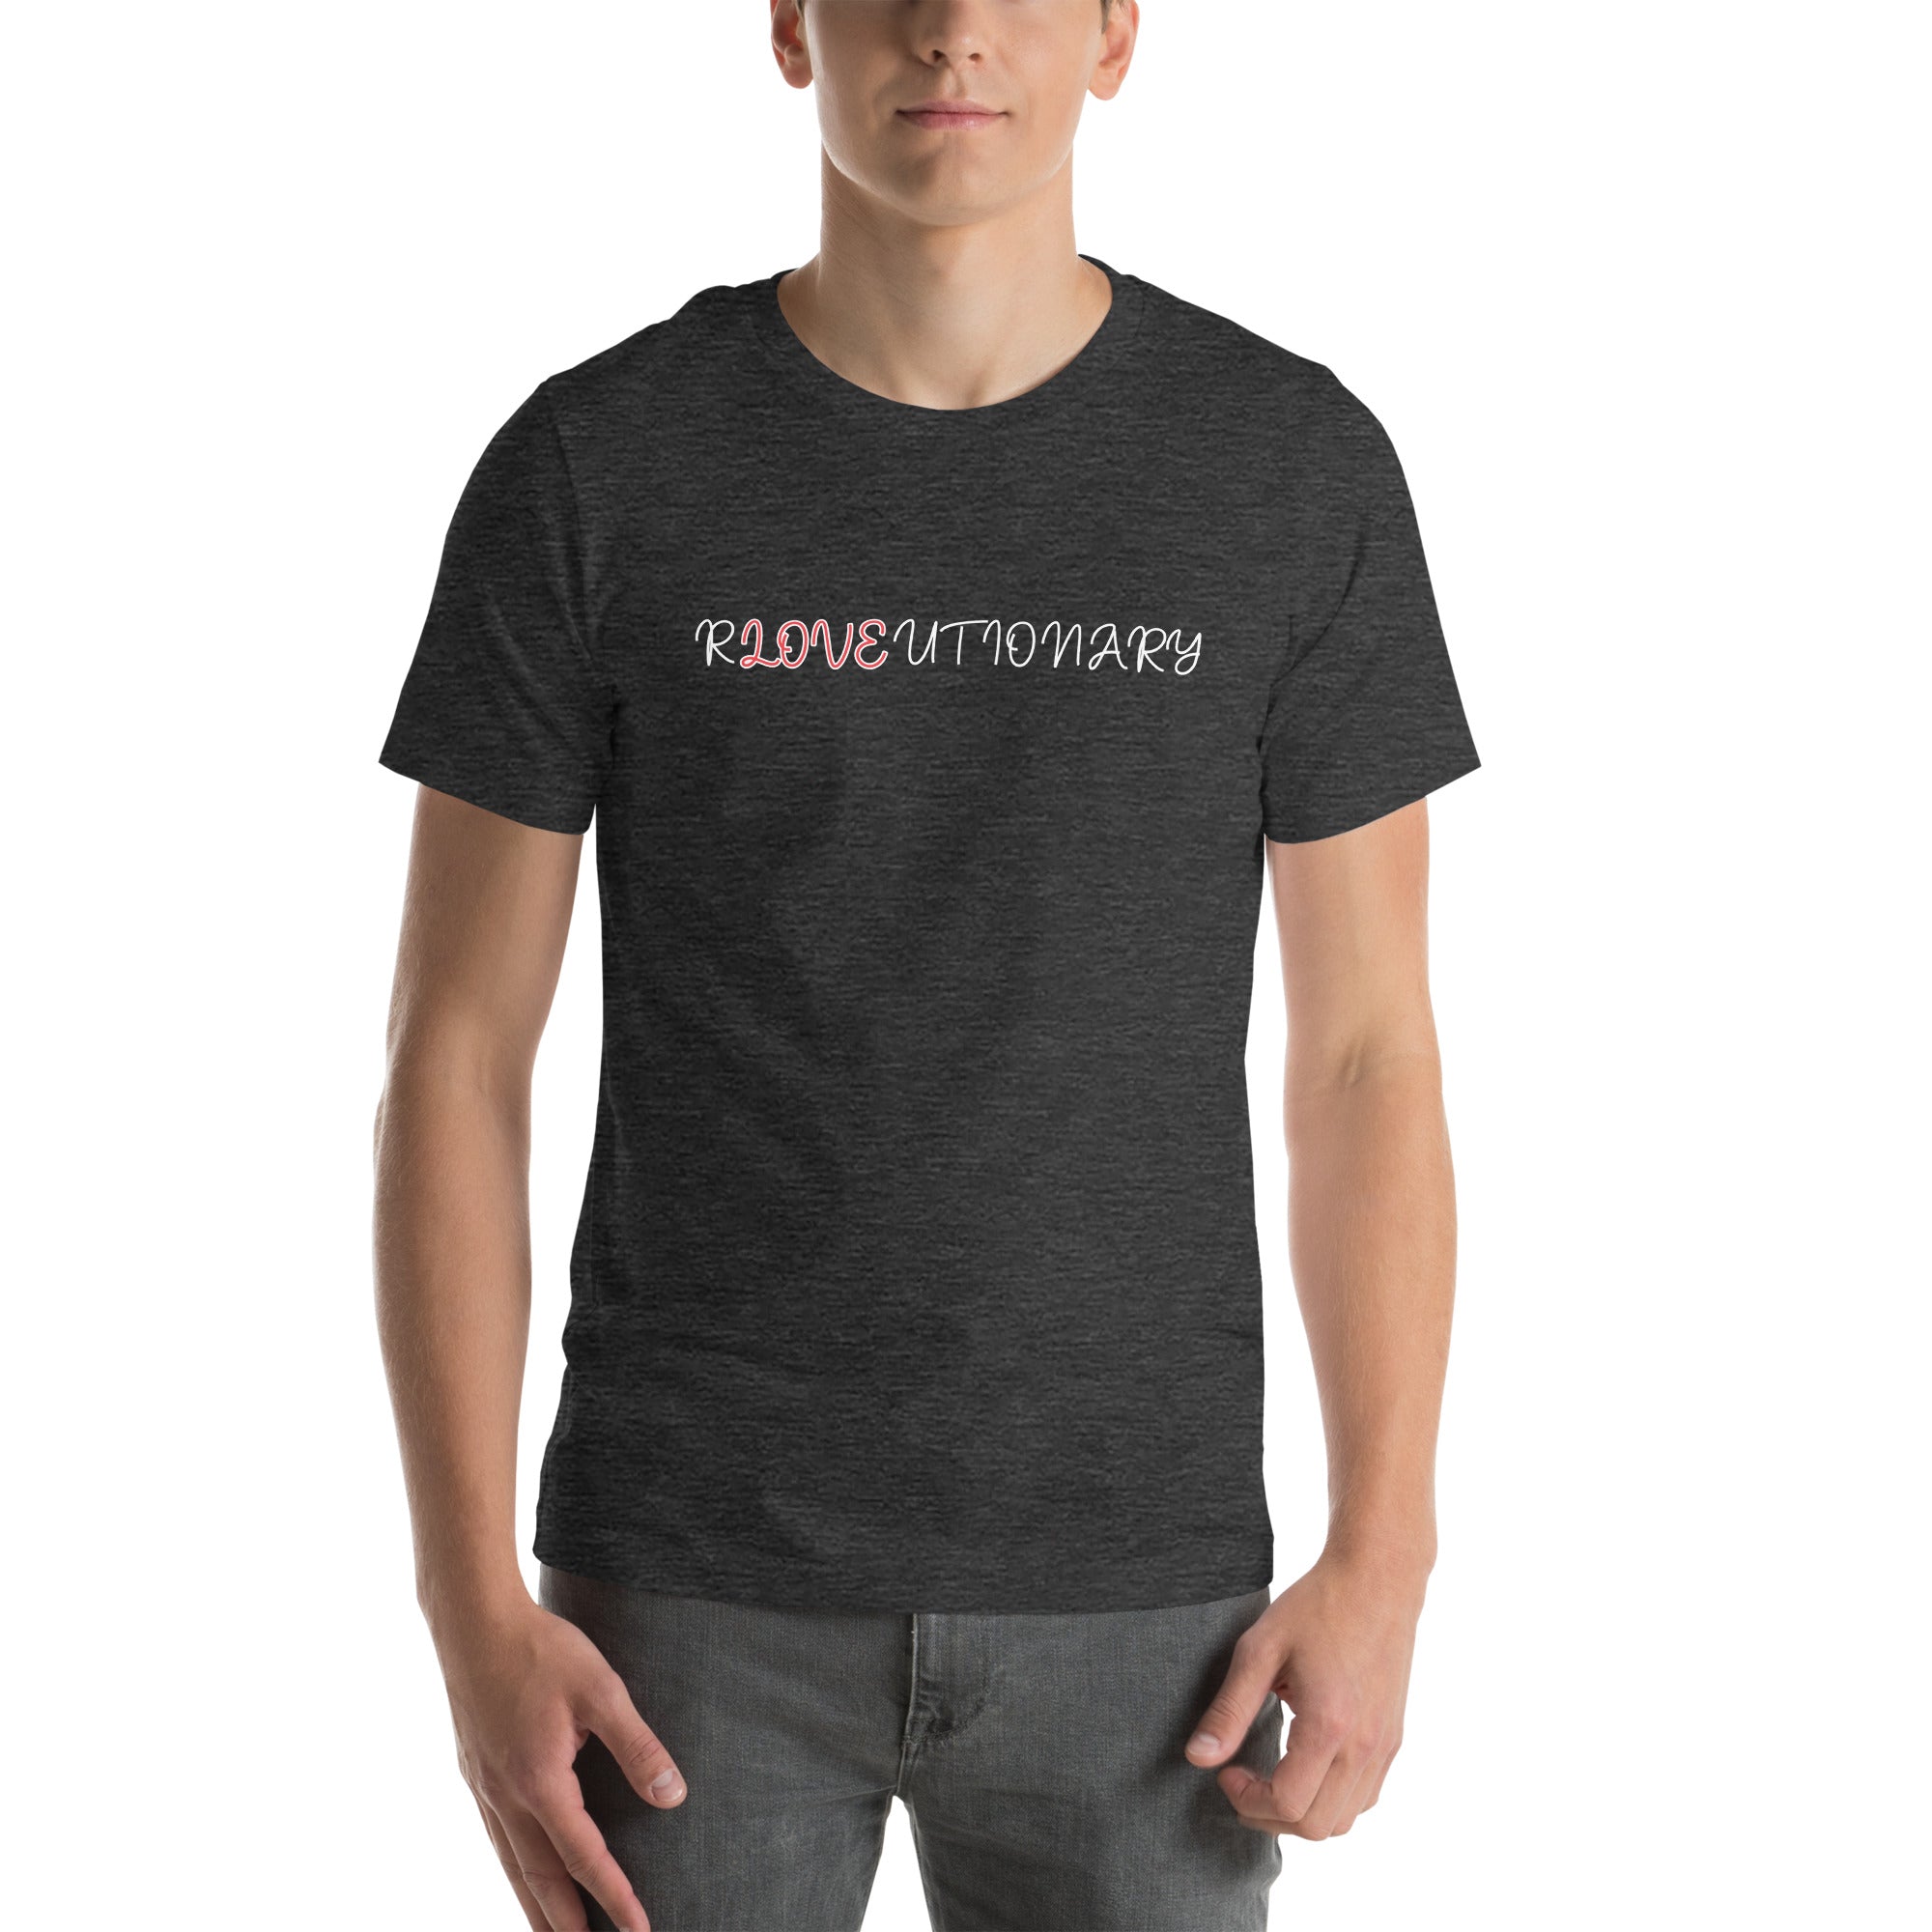 Revolutionary Unisex t-shirt | Positive Affirmation T-Shirt